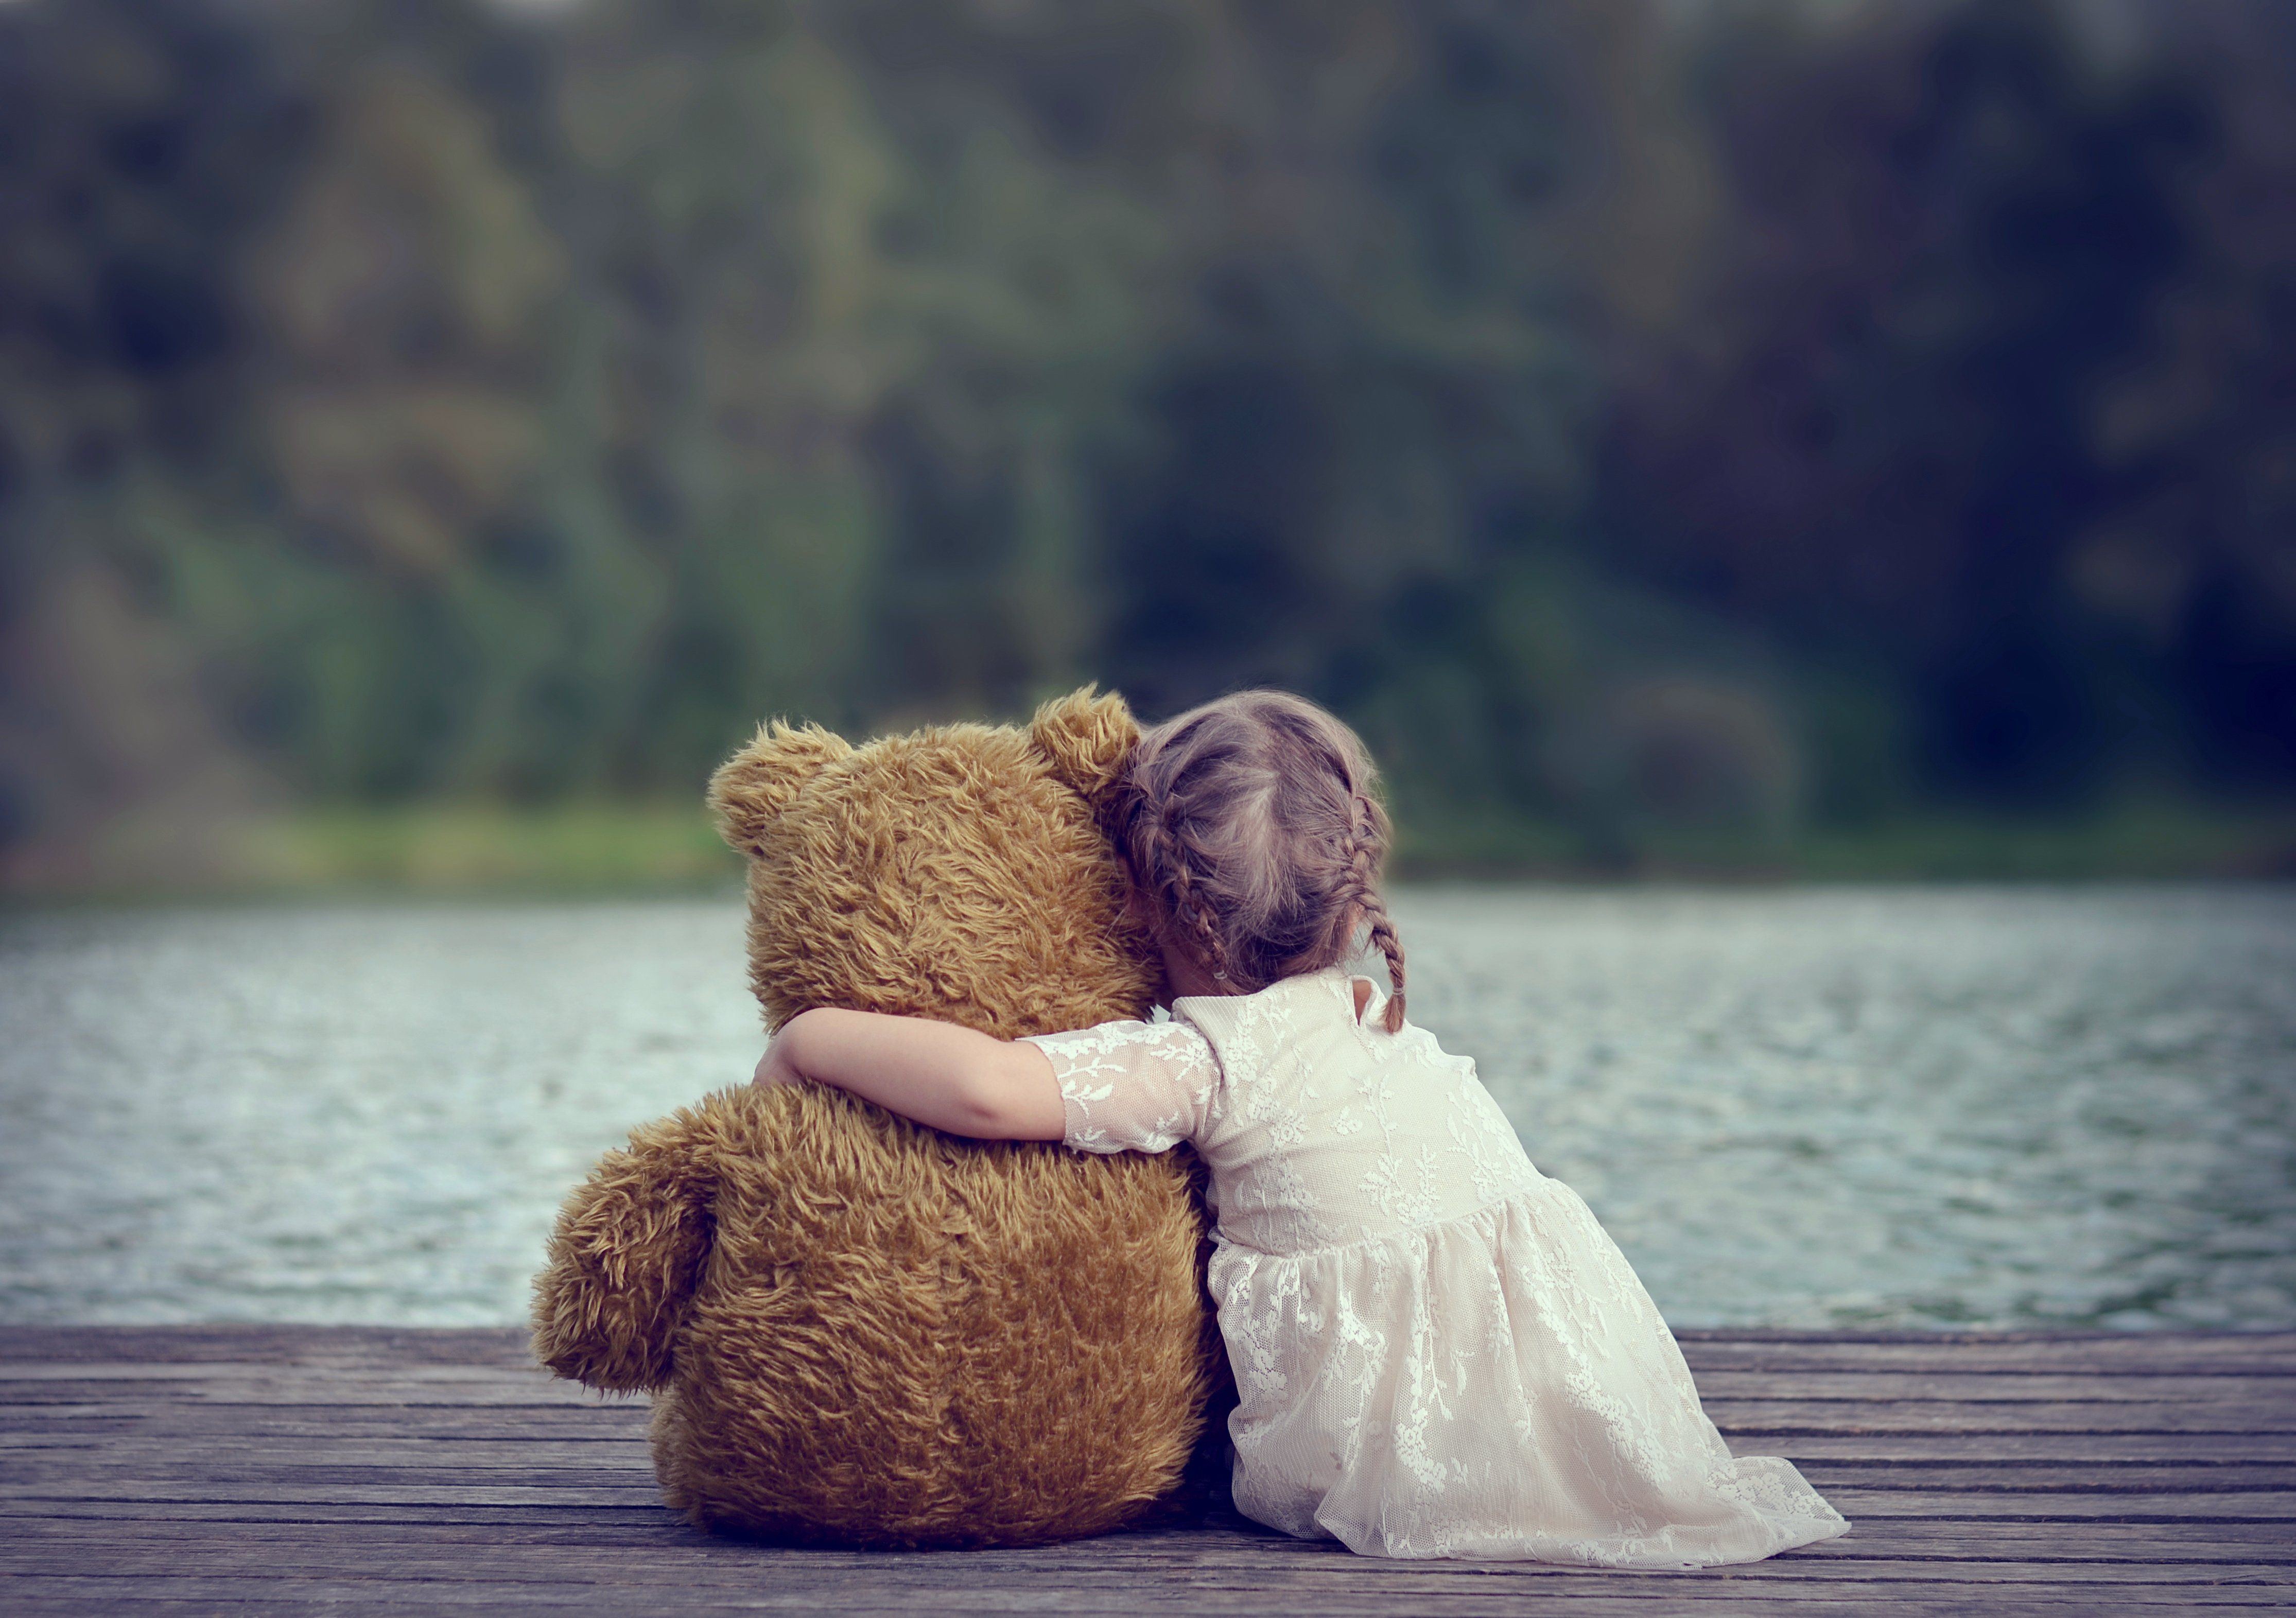 Kids children childhood teddy bear friendship friends lakes hug